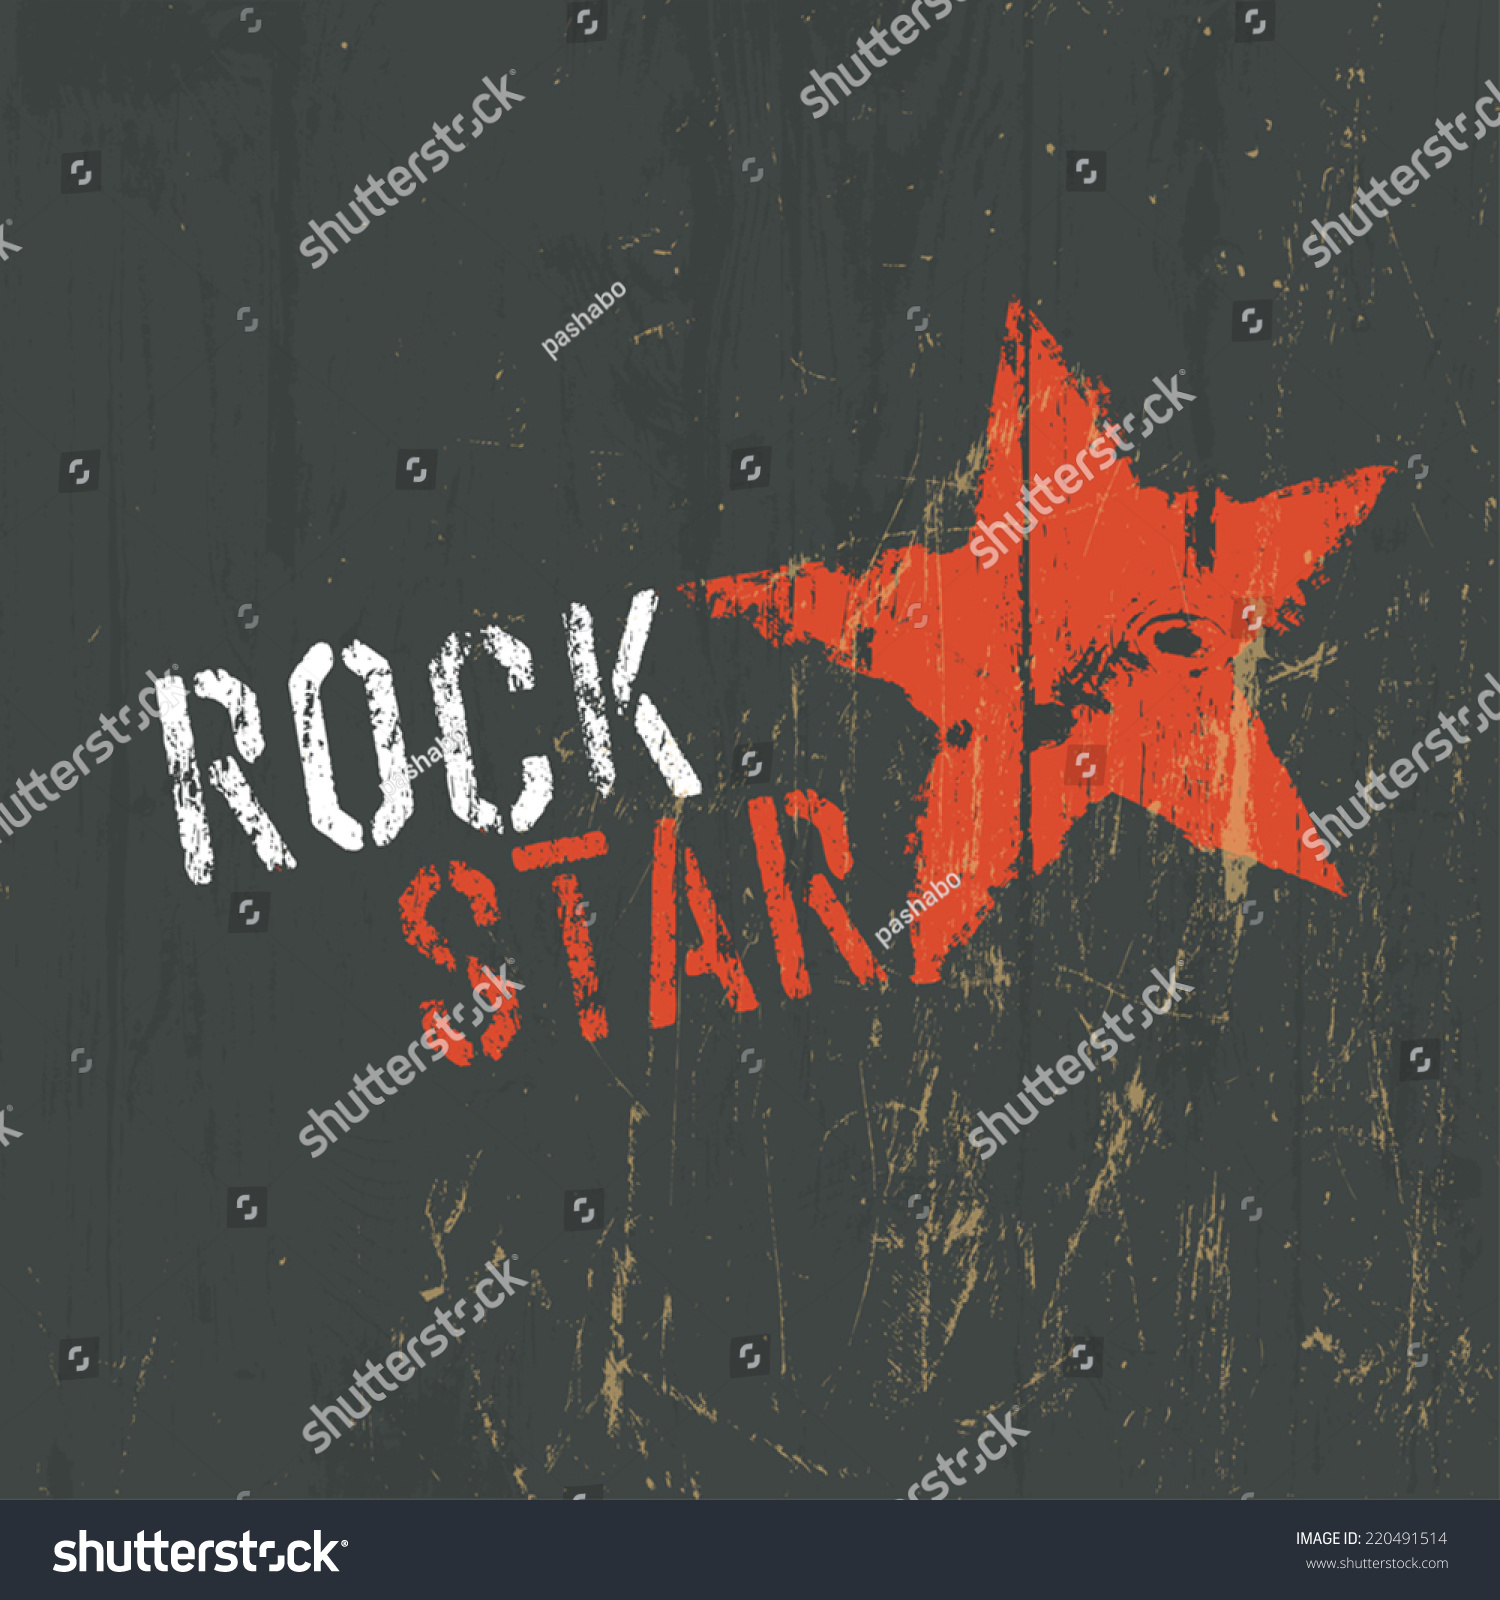 34,501 Rock star symbol Images, Stock Photos & Vectors | Shutterstock